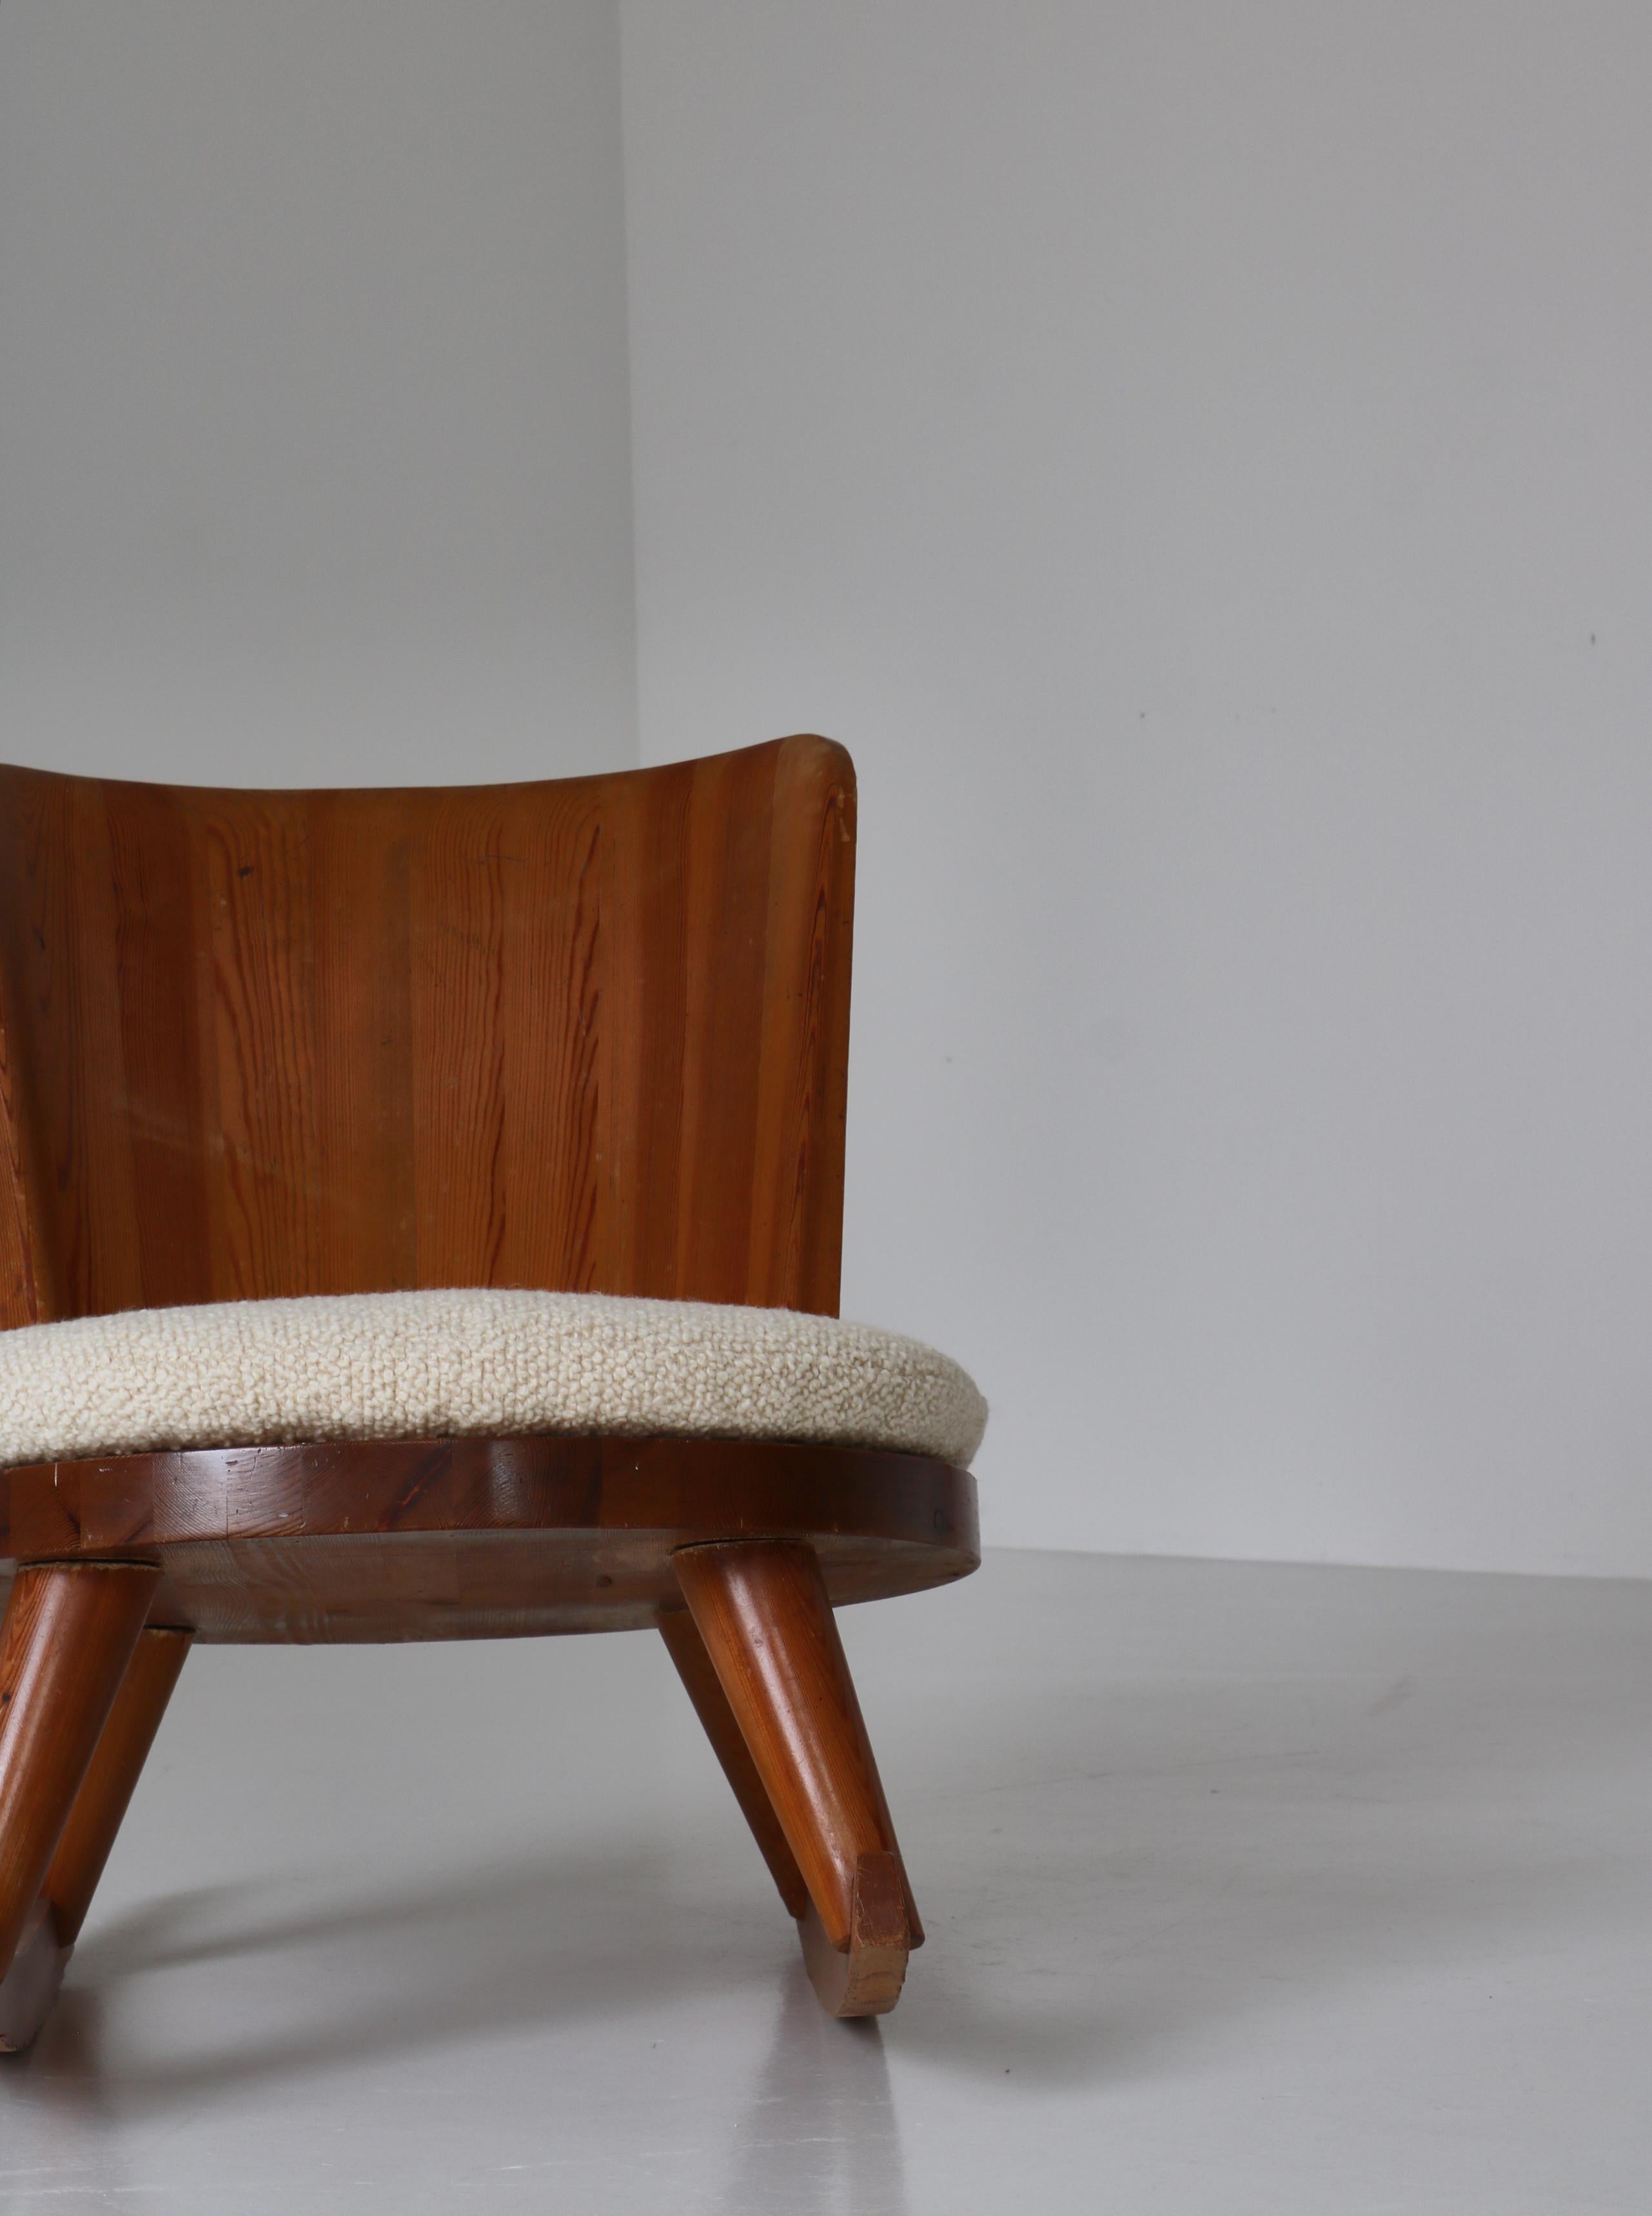 Rocking Chair in Pine by Torsten Claeson for Svensk Fur, Swedish Modern, 1930s For Sale 3